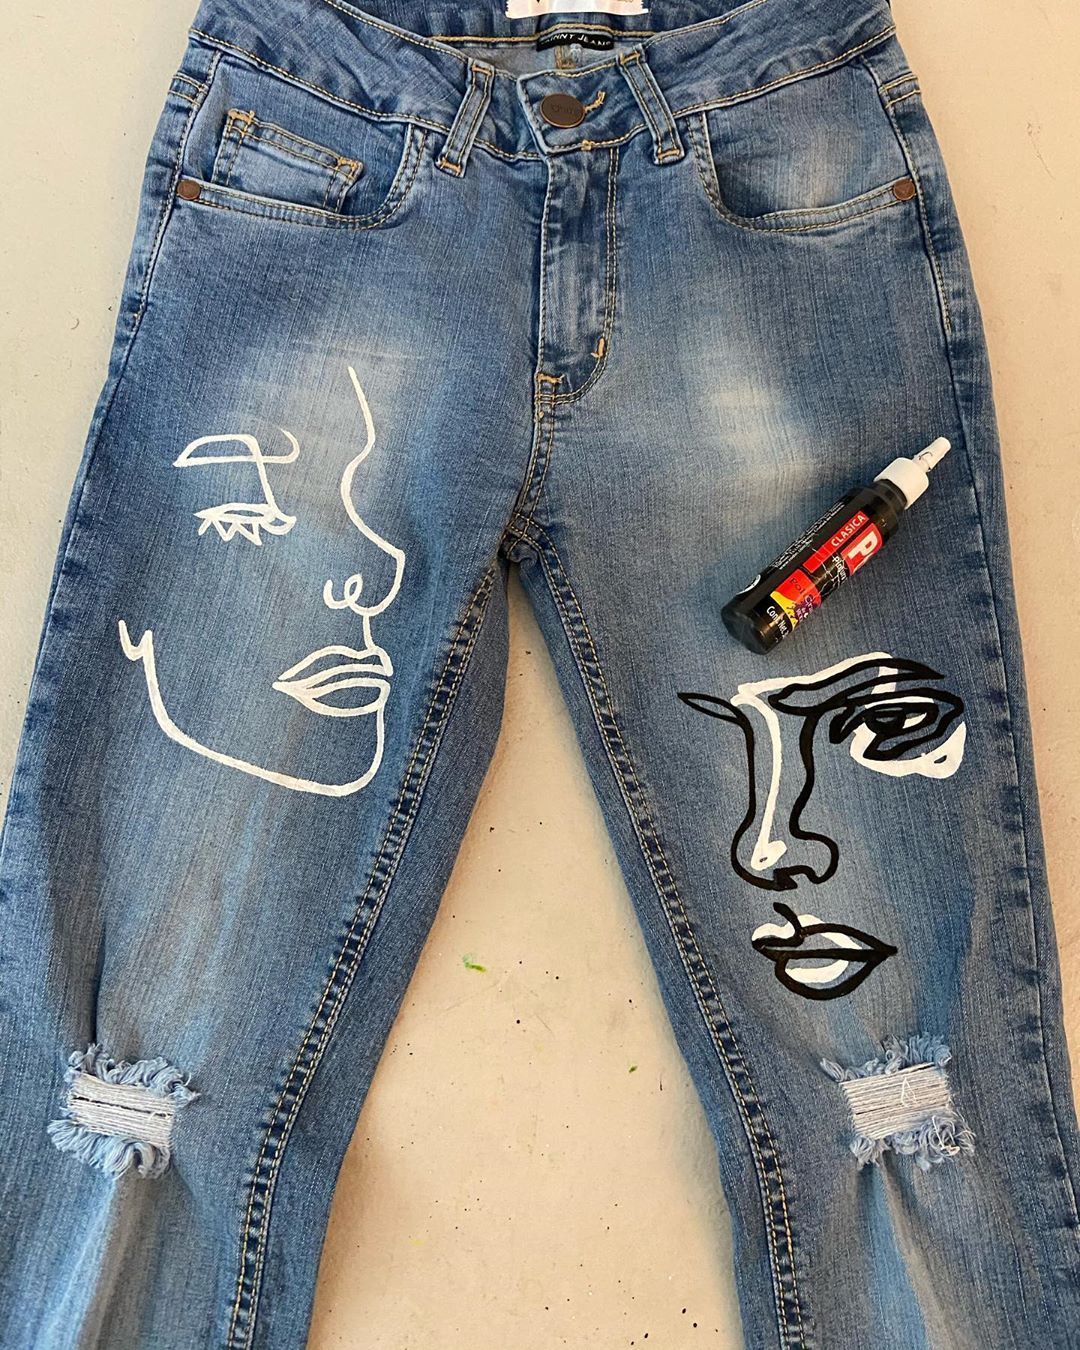 13 style Jeans diy ideas